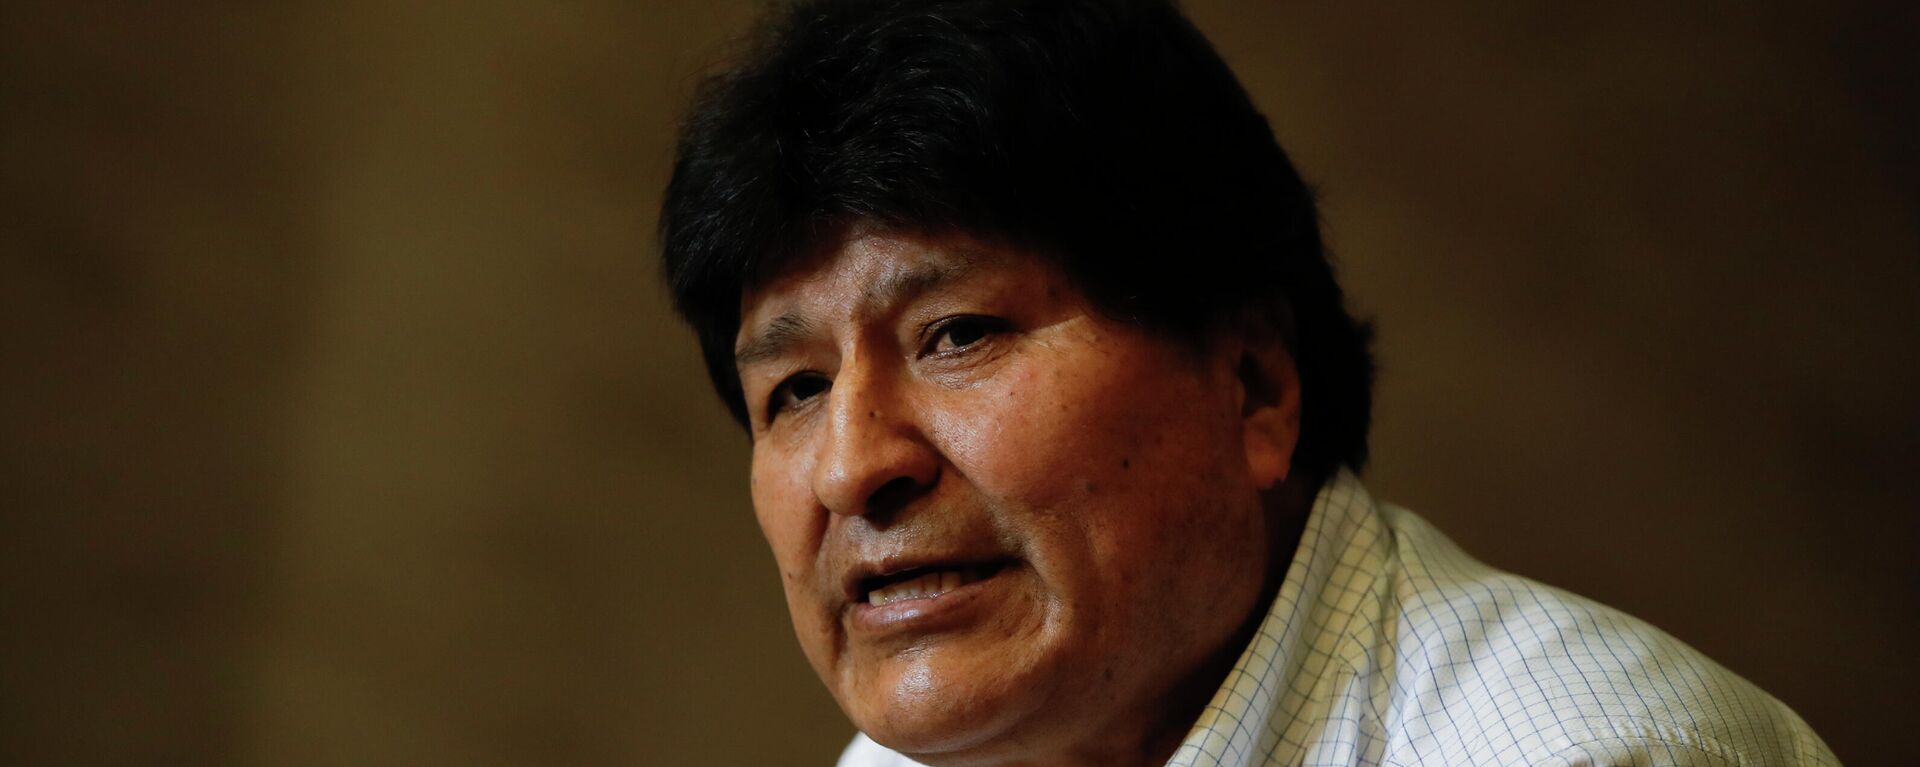 El expresidente socialista boliviano Evo Morales (2006-2019) - Sputnik Mundo, 1920, 06.04.2022